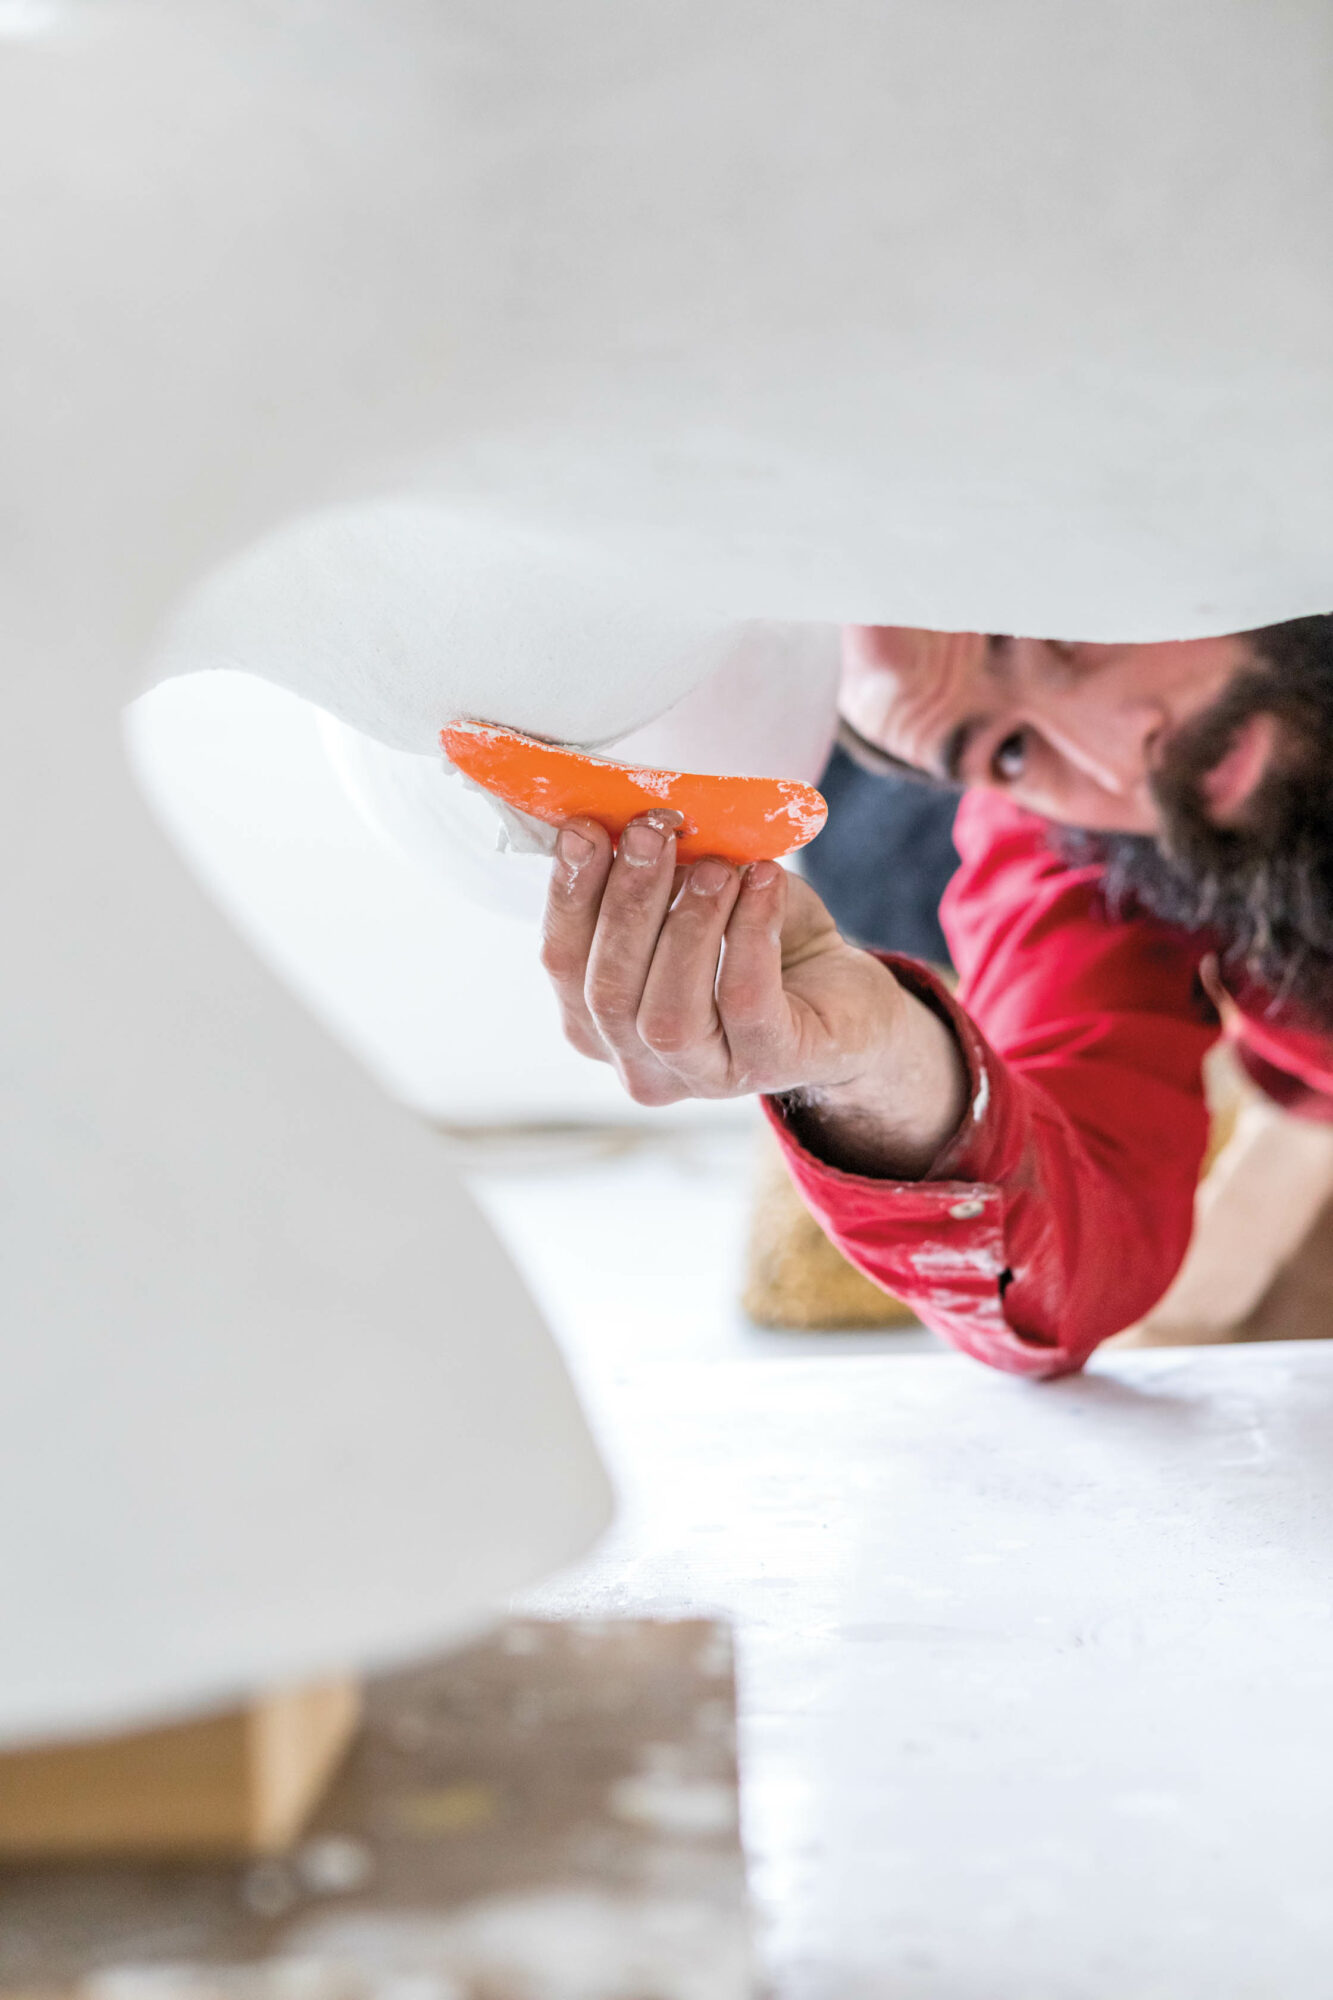 Artist J McDonald using an orange scraper on his white sculpture